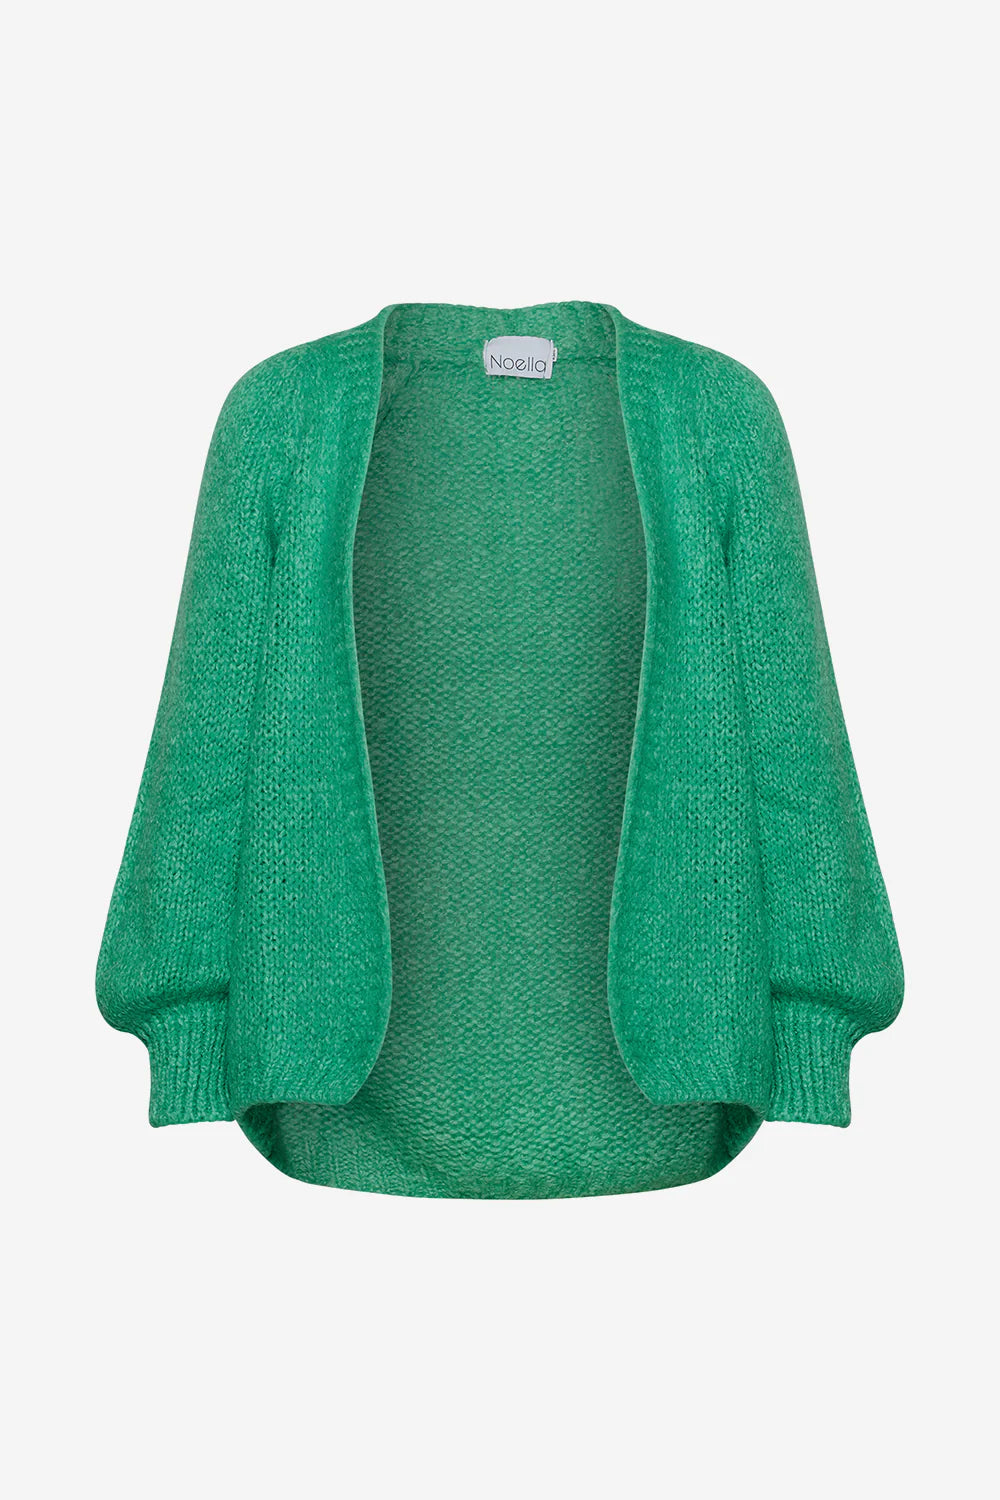 Noella - Fora Knit Cardigan - Light Green